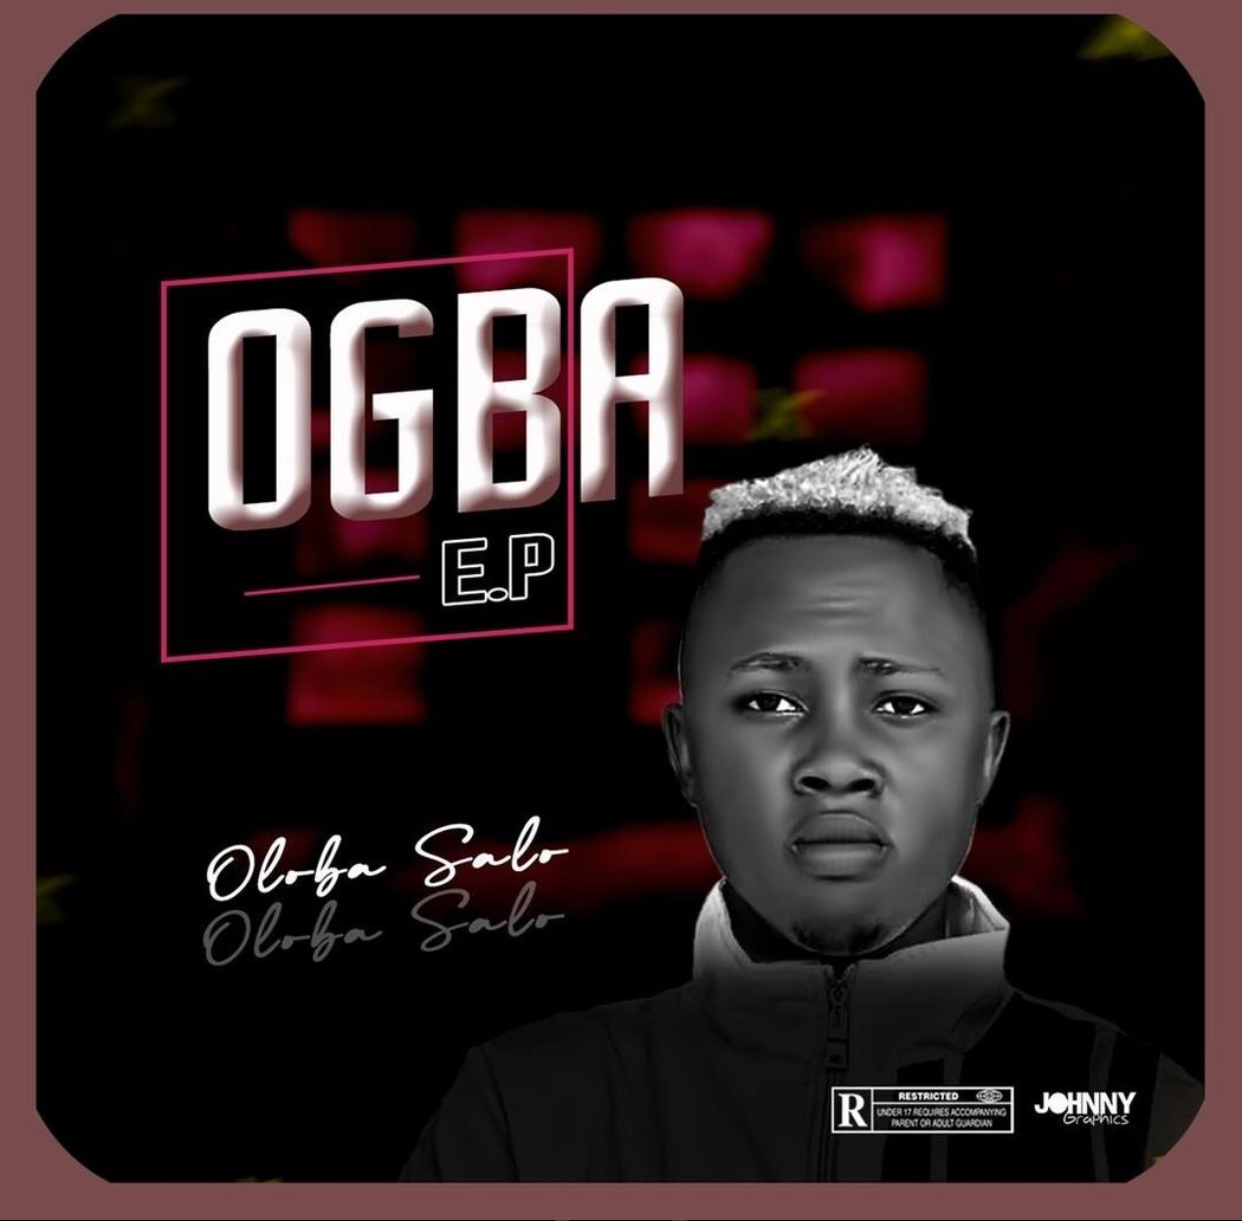 Oloba Salo - Hustle (Ogba EP)